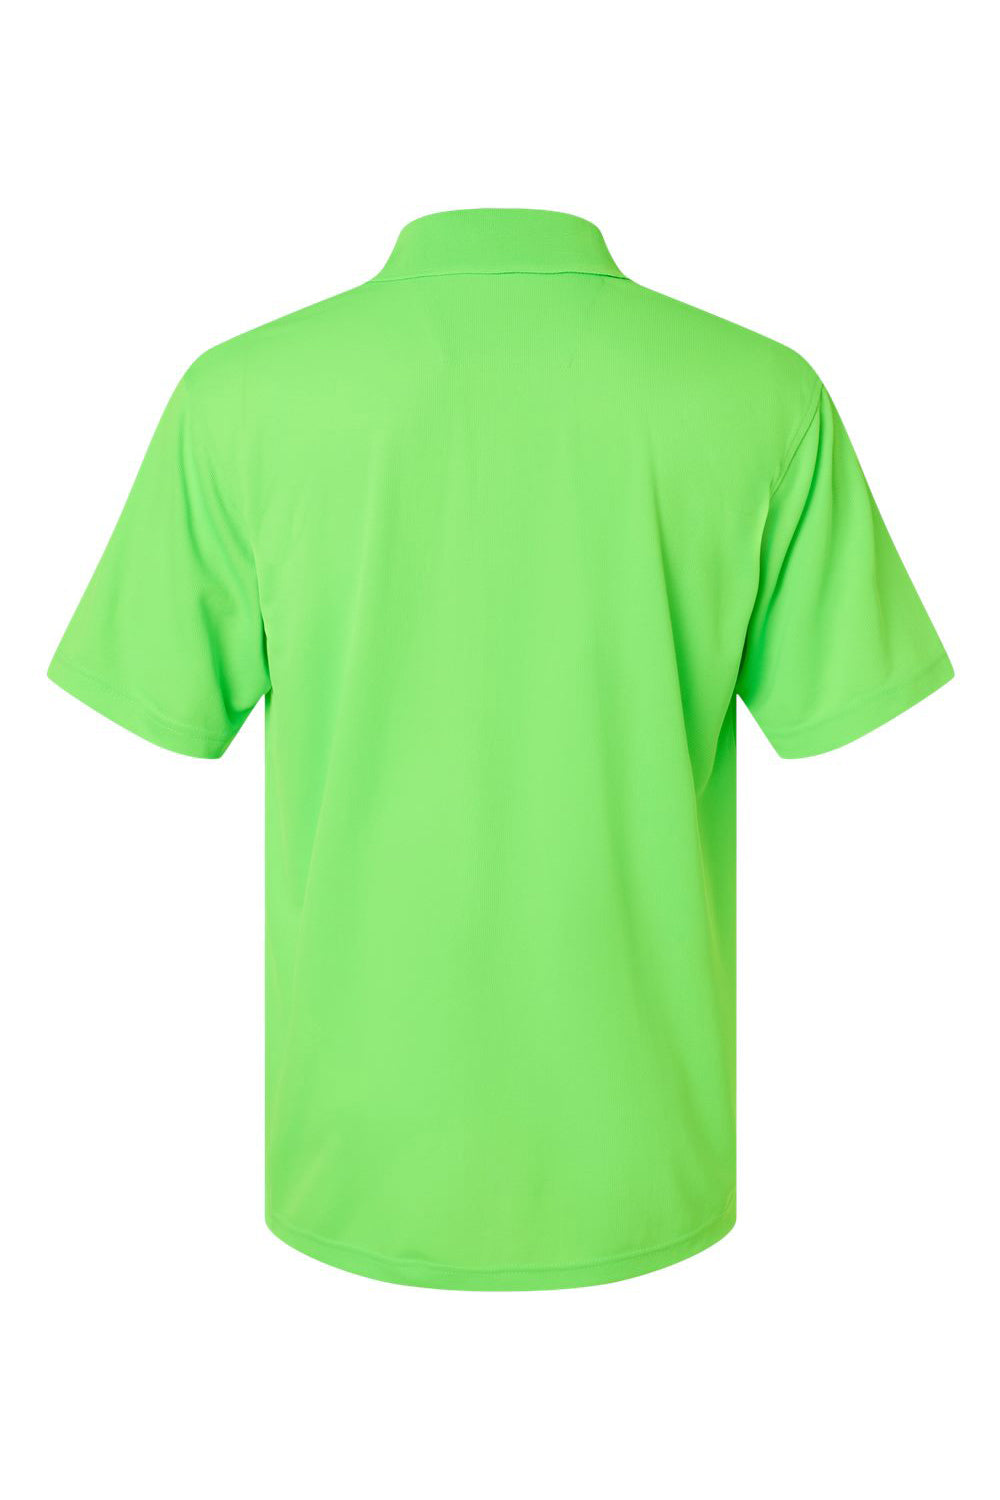 Paragon 100 Mens Saratoga Performance Mini Mesh Short Sleeve Polo Shirt Neon Lime Green Flat Back